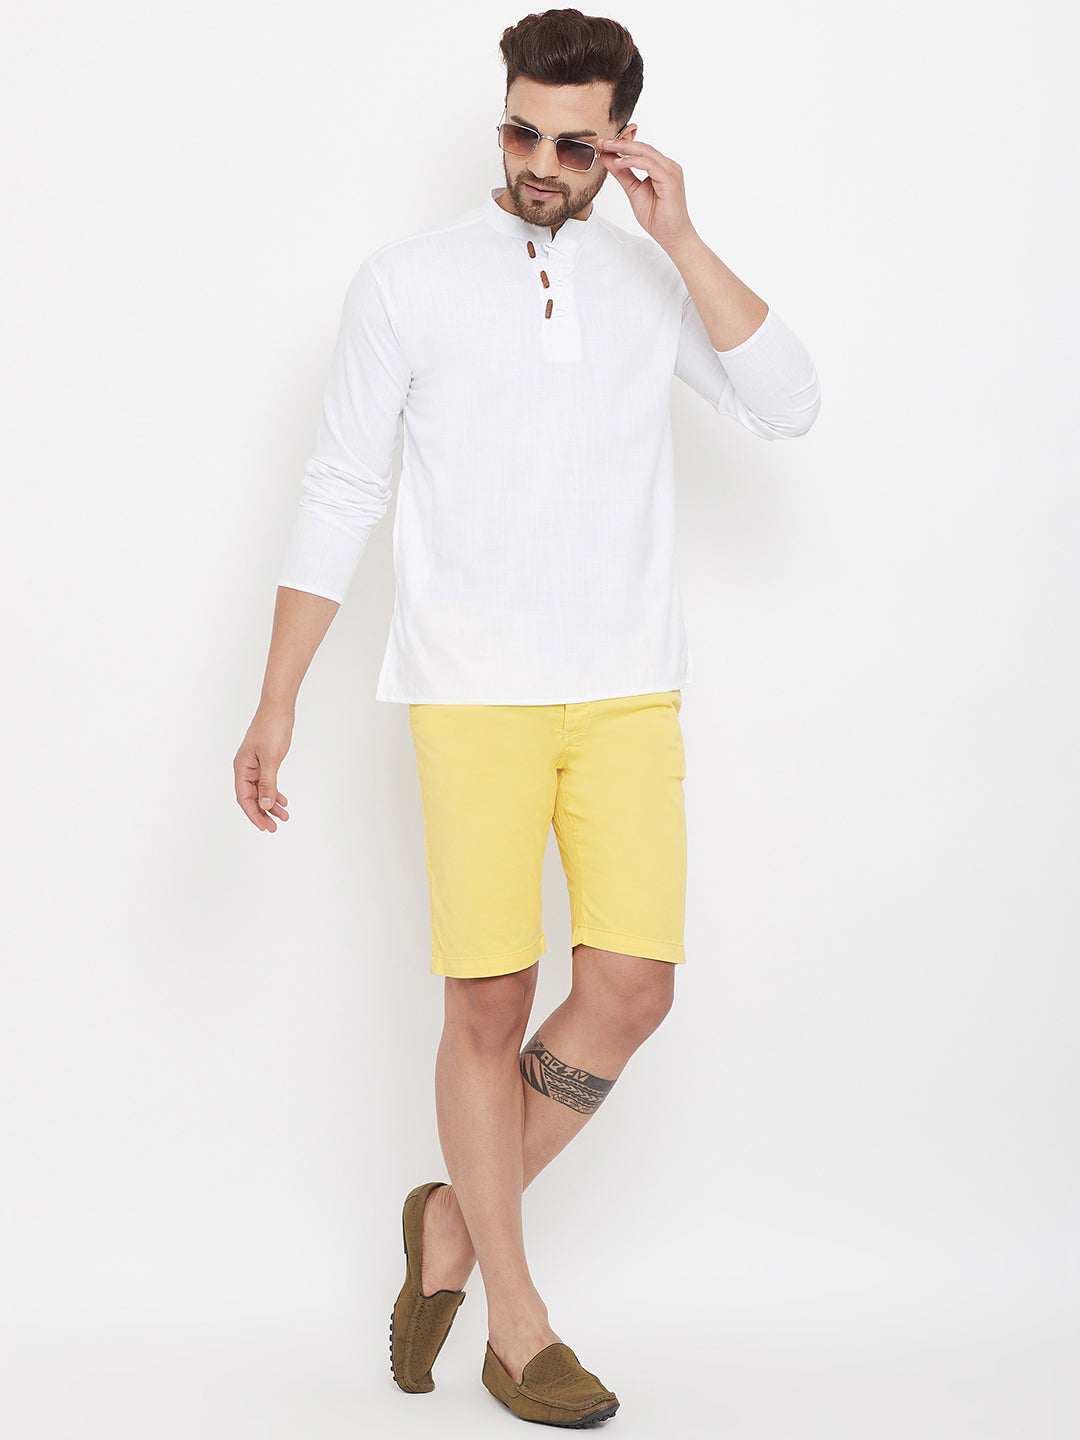 Men's White Button Placket Shirt Kurta - Even Apparels